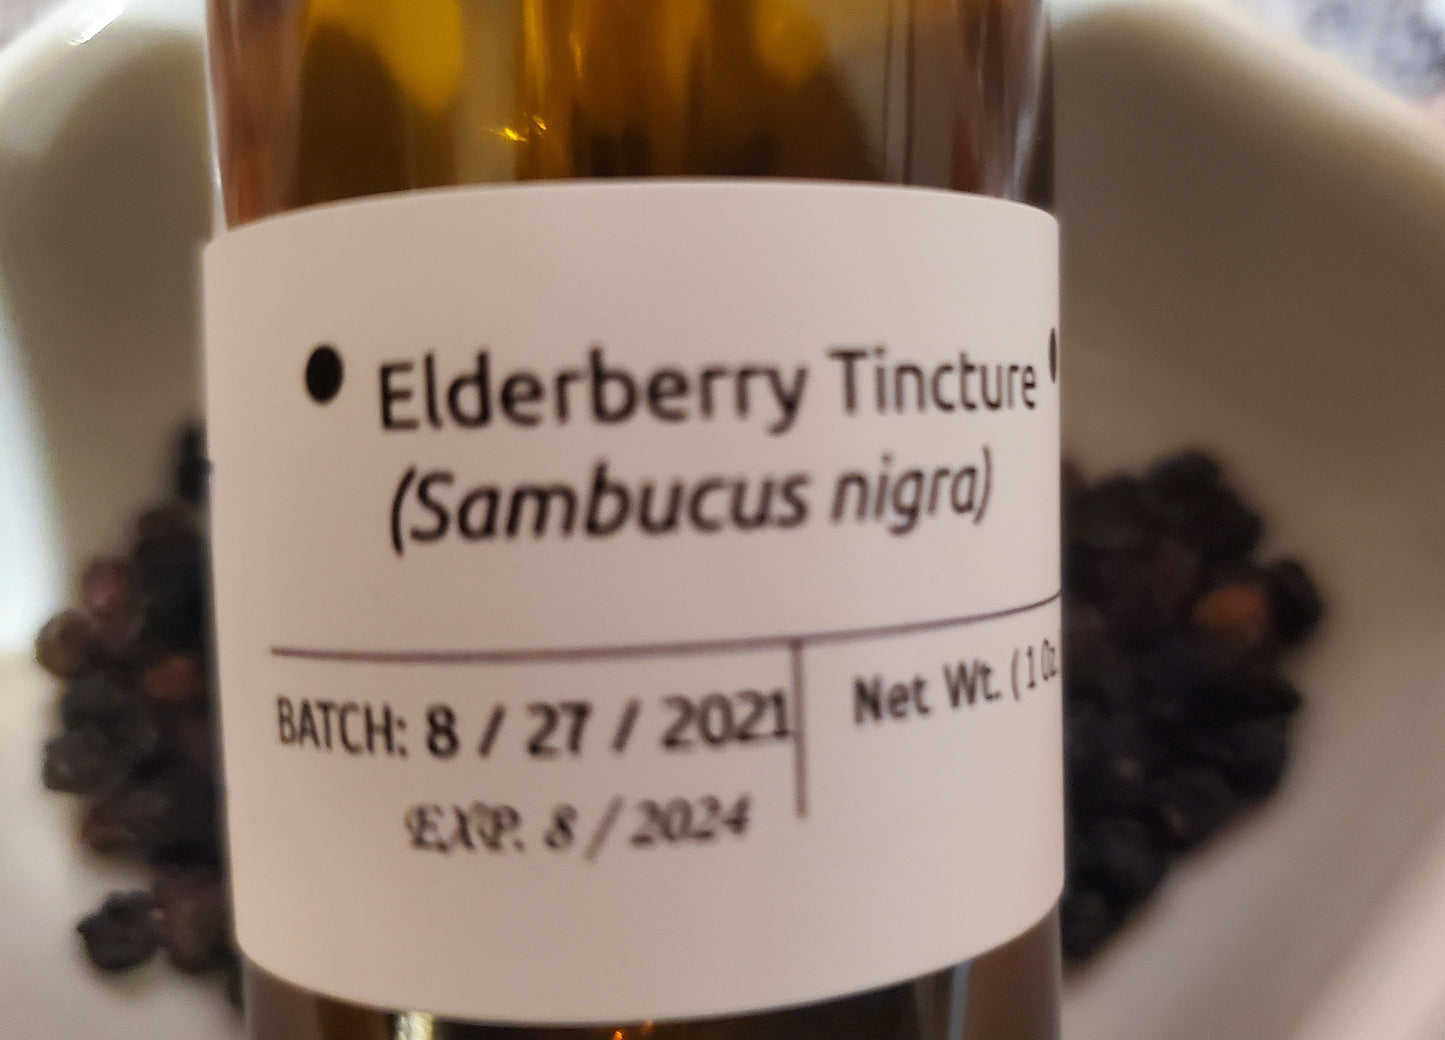 Elderberry Tincture (Sambucas nigra) - Buy One Get One Free!